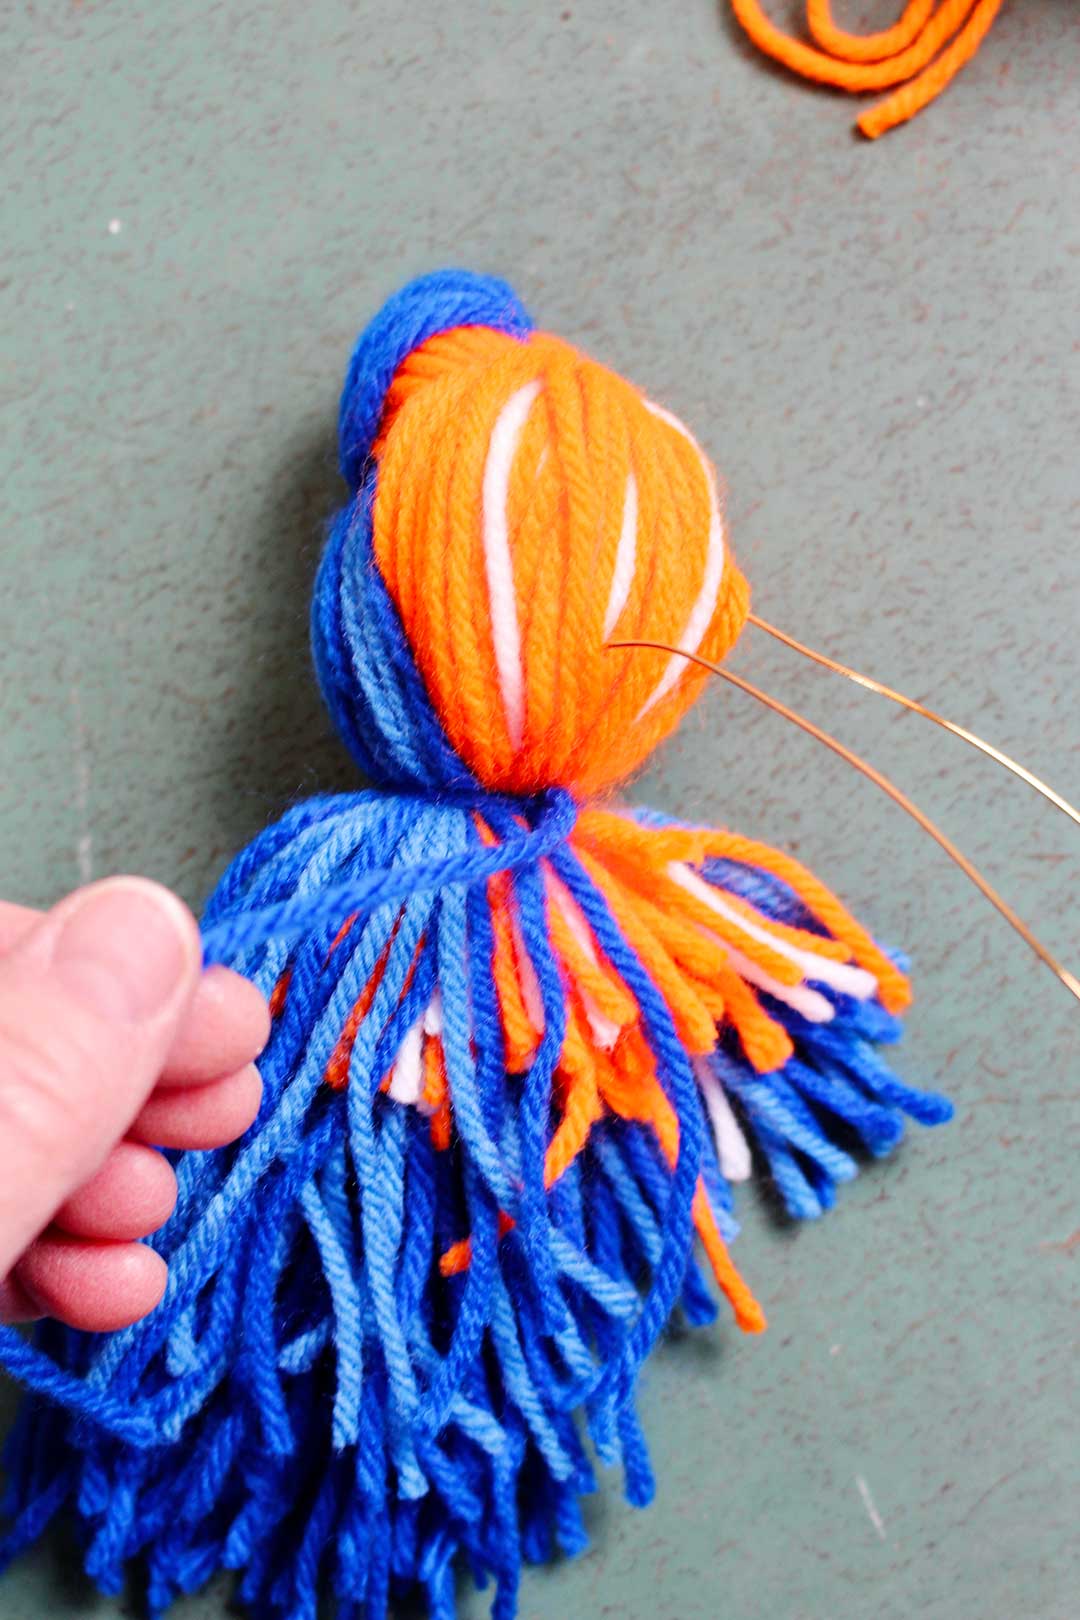 Tying a piece of blue yarn around the "tail" of a yarn bird.